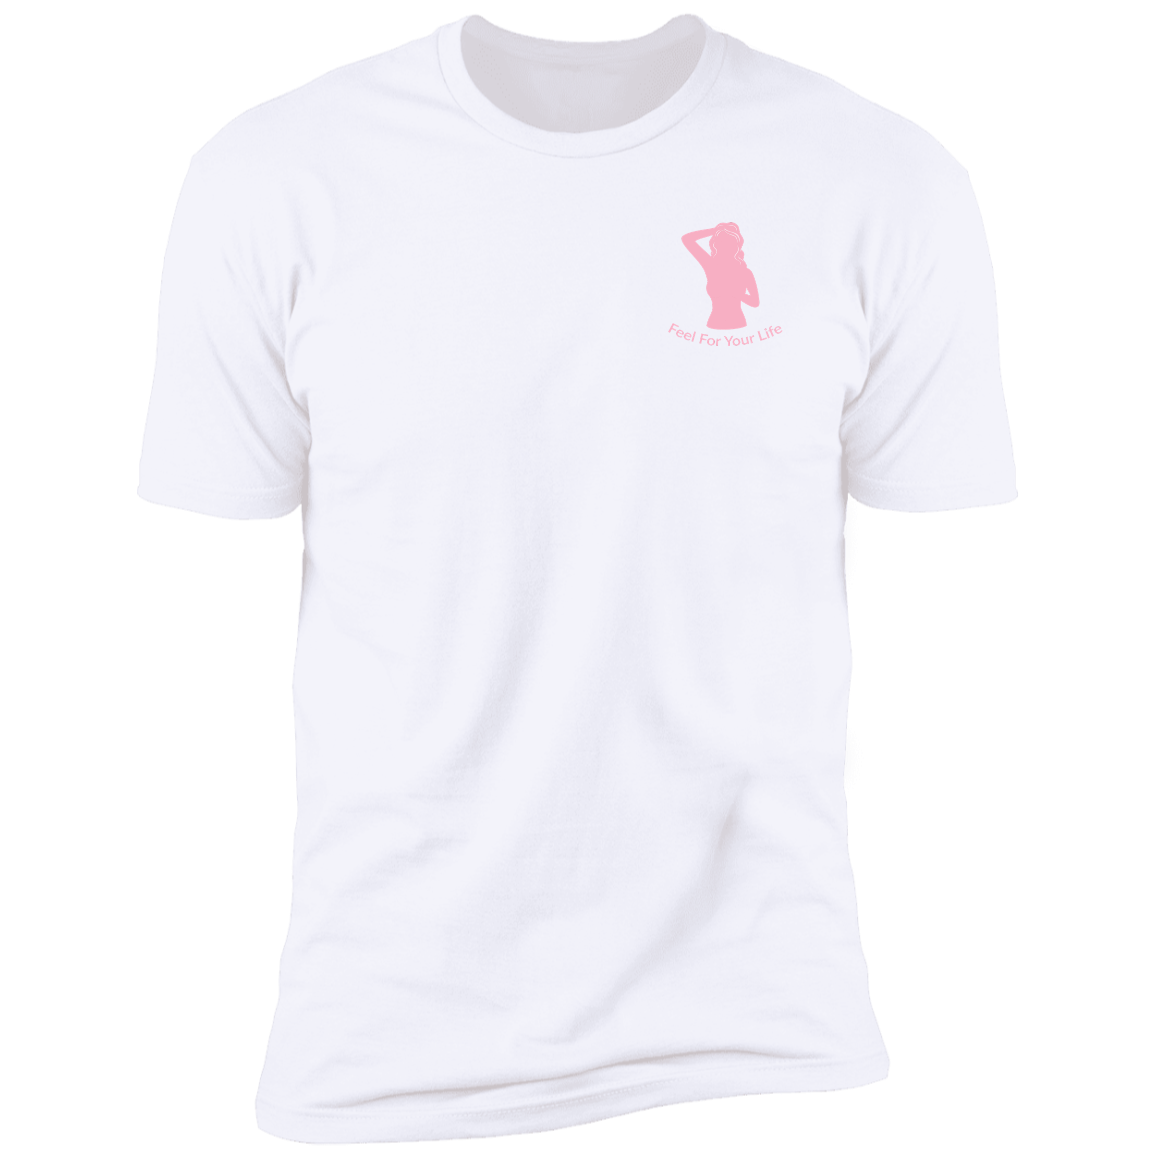 Feel For Your Life Unisex Tshirt Light Gray Small Light Pink Logo